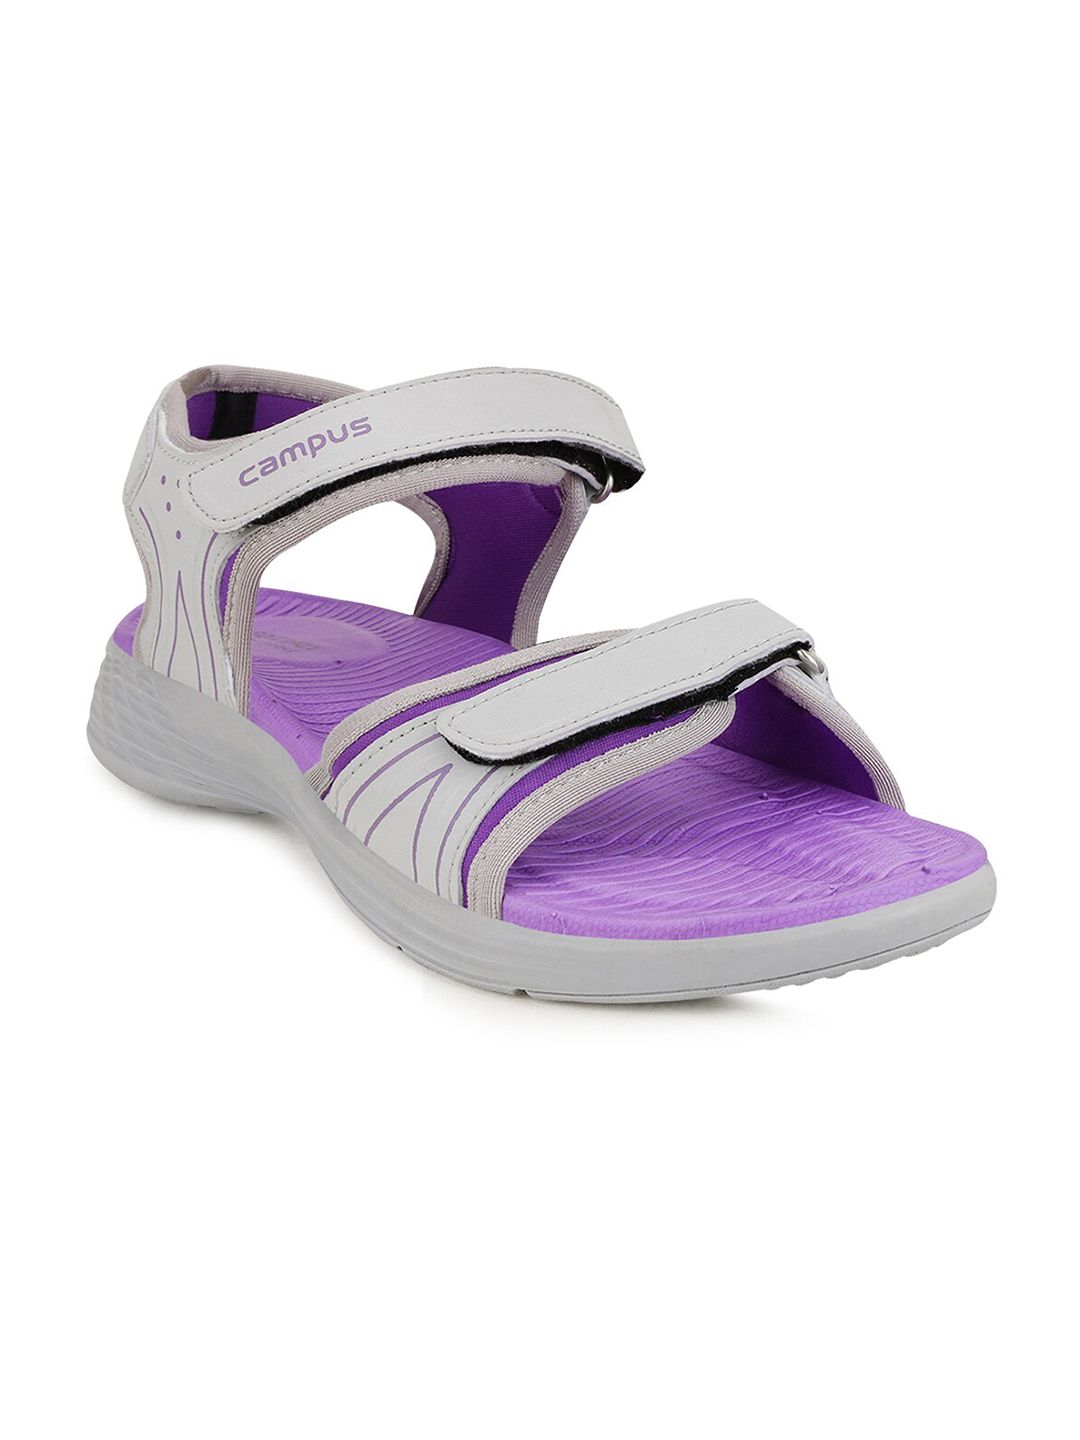 Campus Women Grey & Purple Sports Sandals Price in India